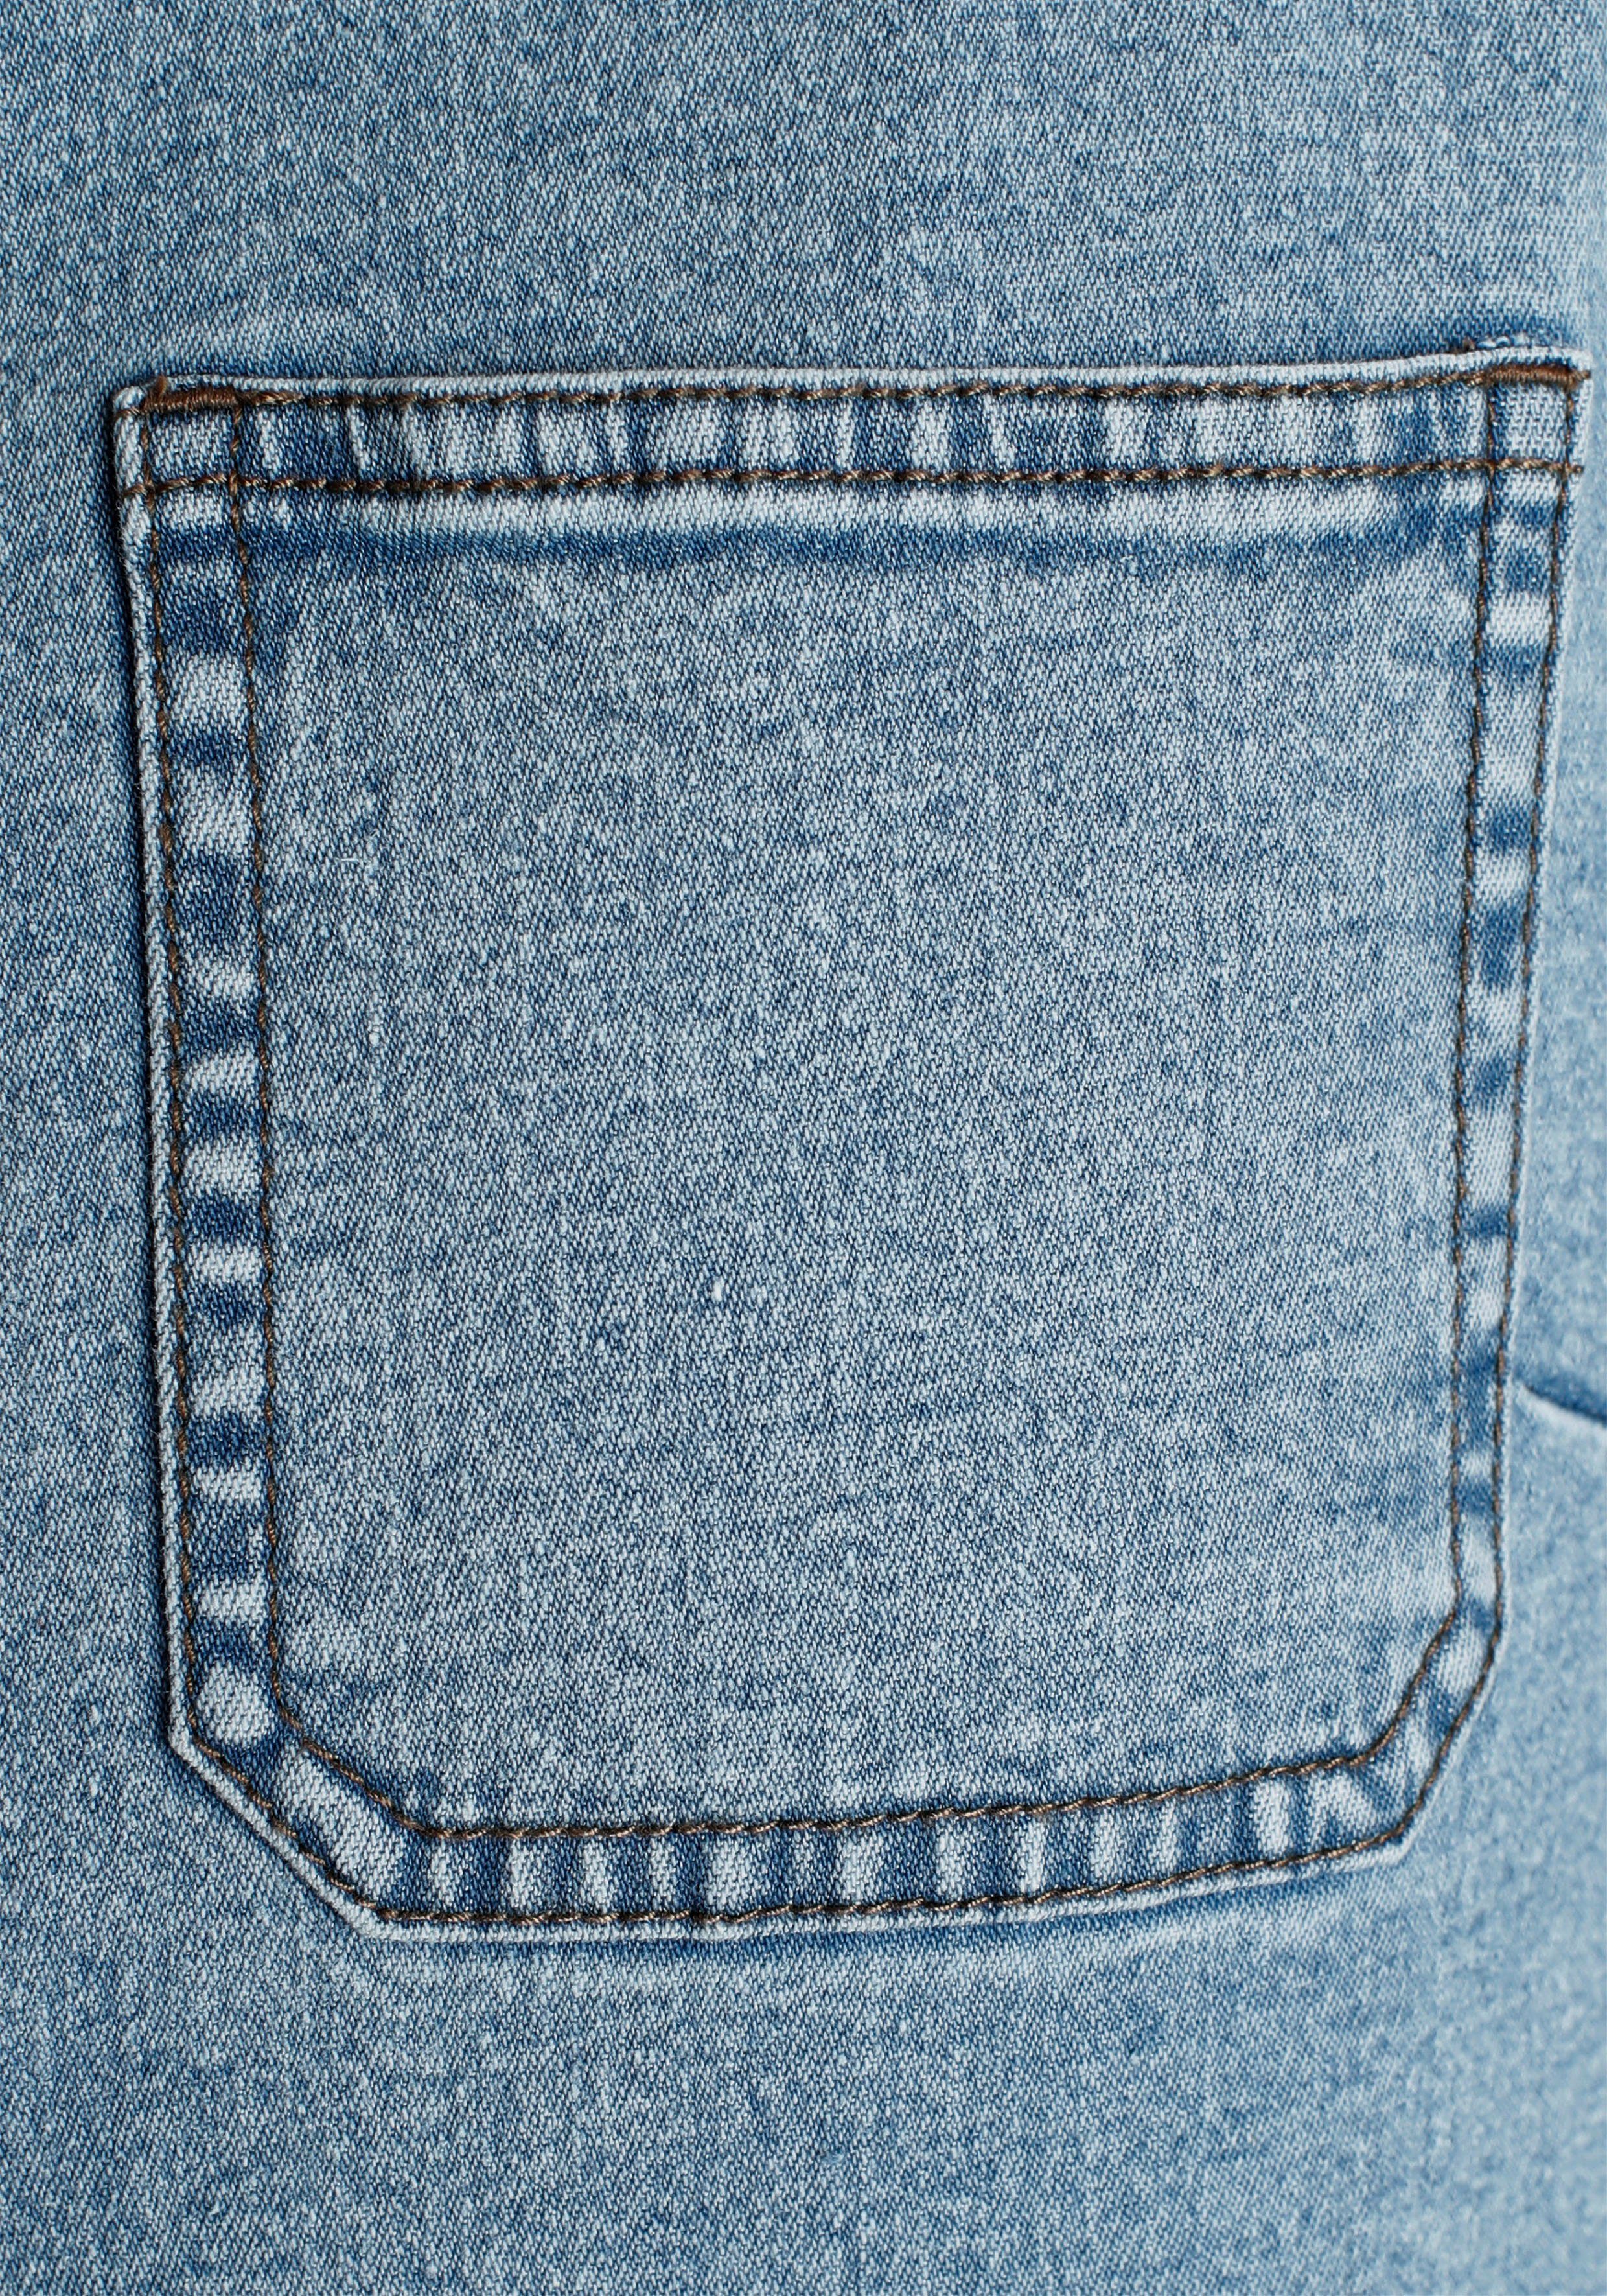 Jeansjacke bleached Arizona Shacket Hemdjacke geschnitten Weiter - Denim